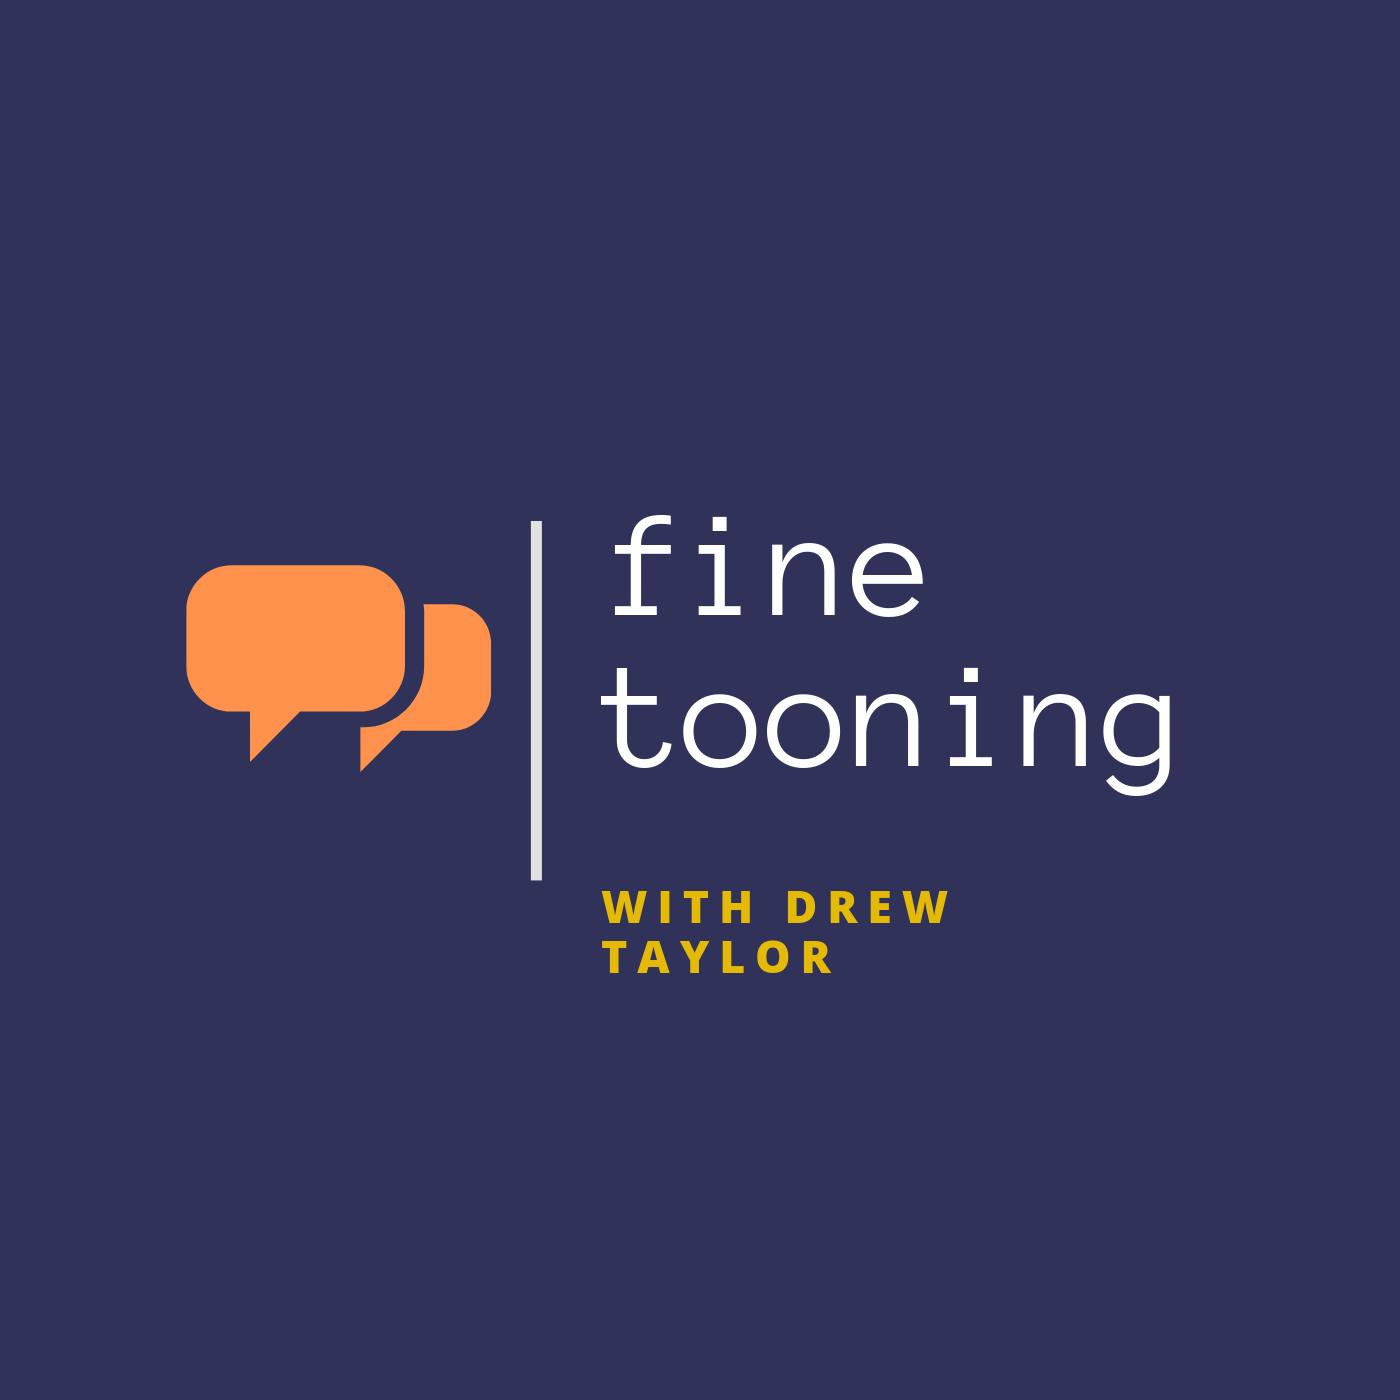 Fine Tooning with Drew Taylor Episode 80: Get the inside scoop on “Scoob!”